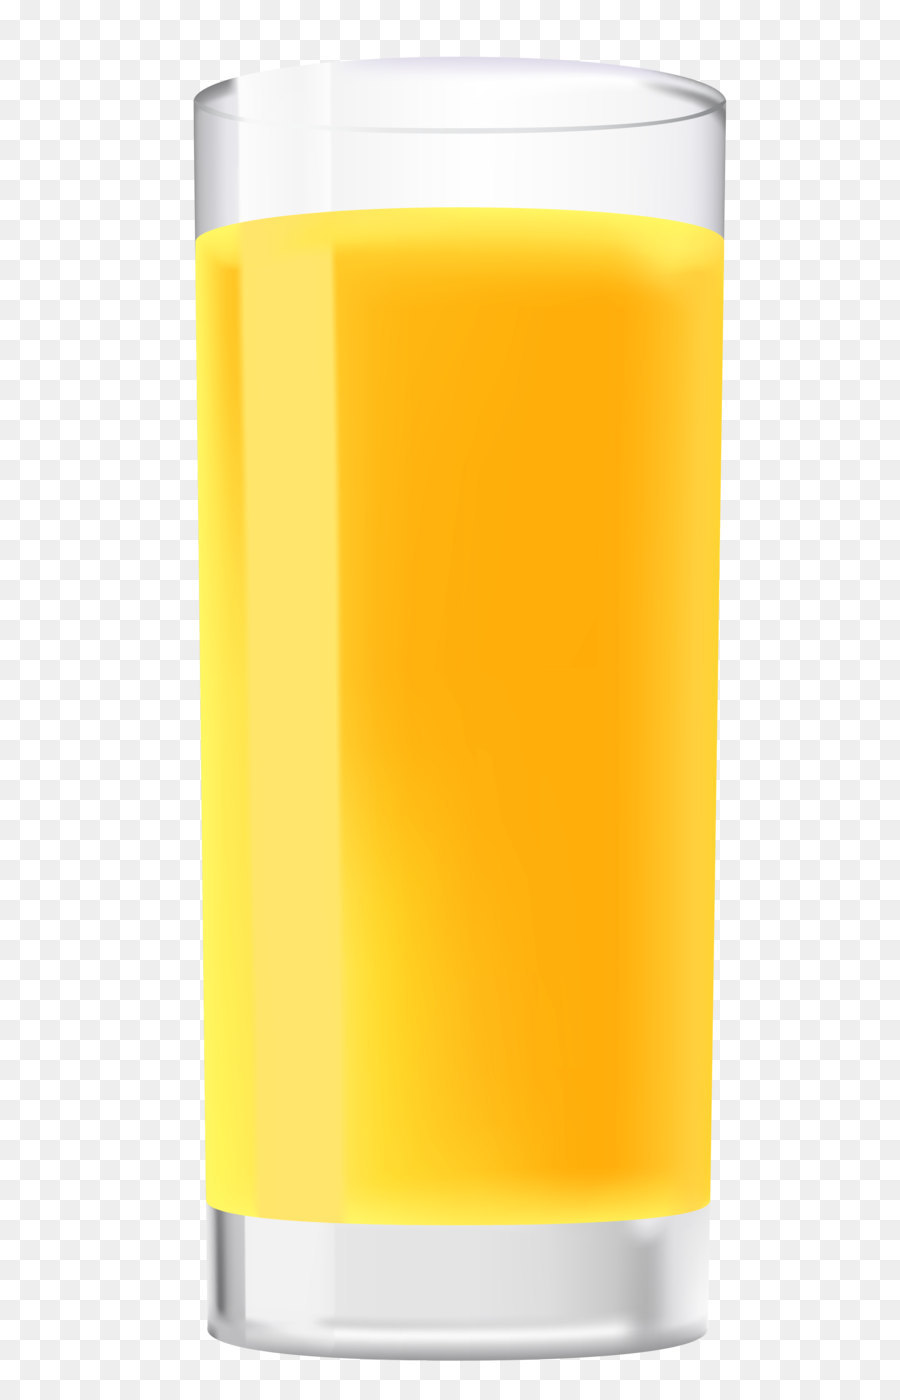 Orange juice harvey wallbanger drink glass of jpg